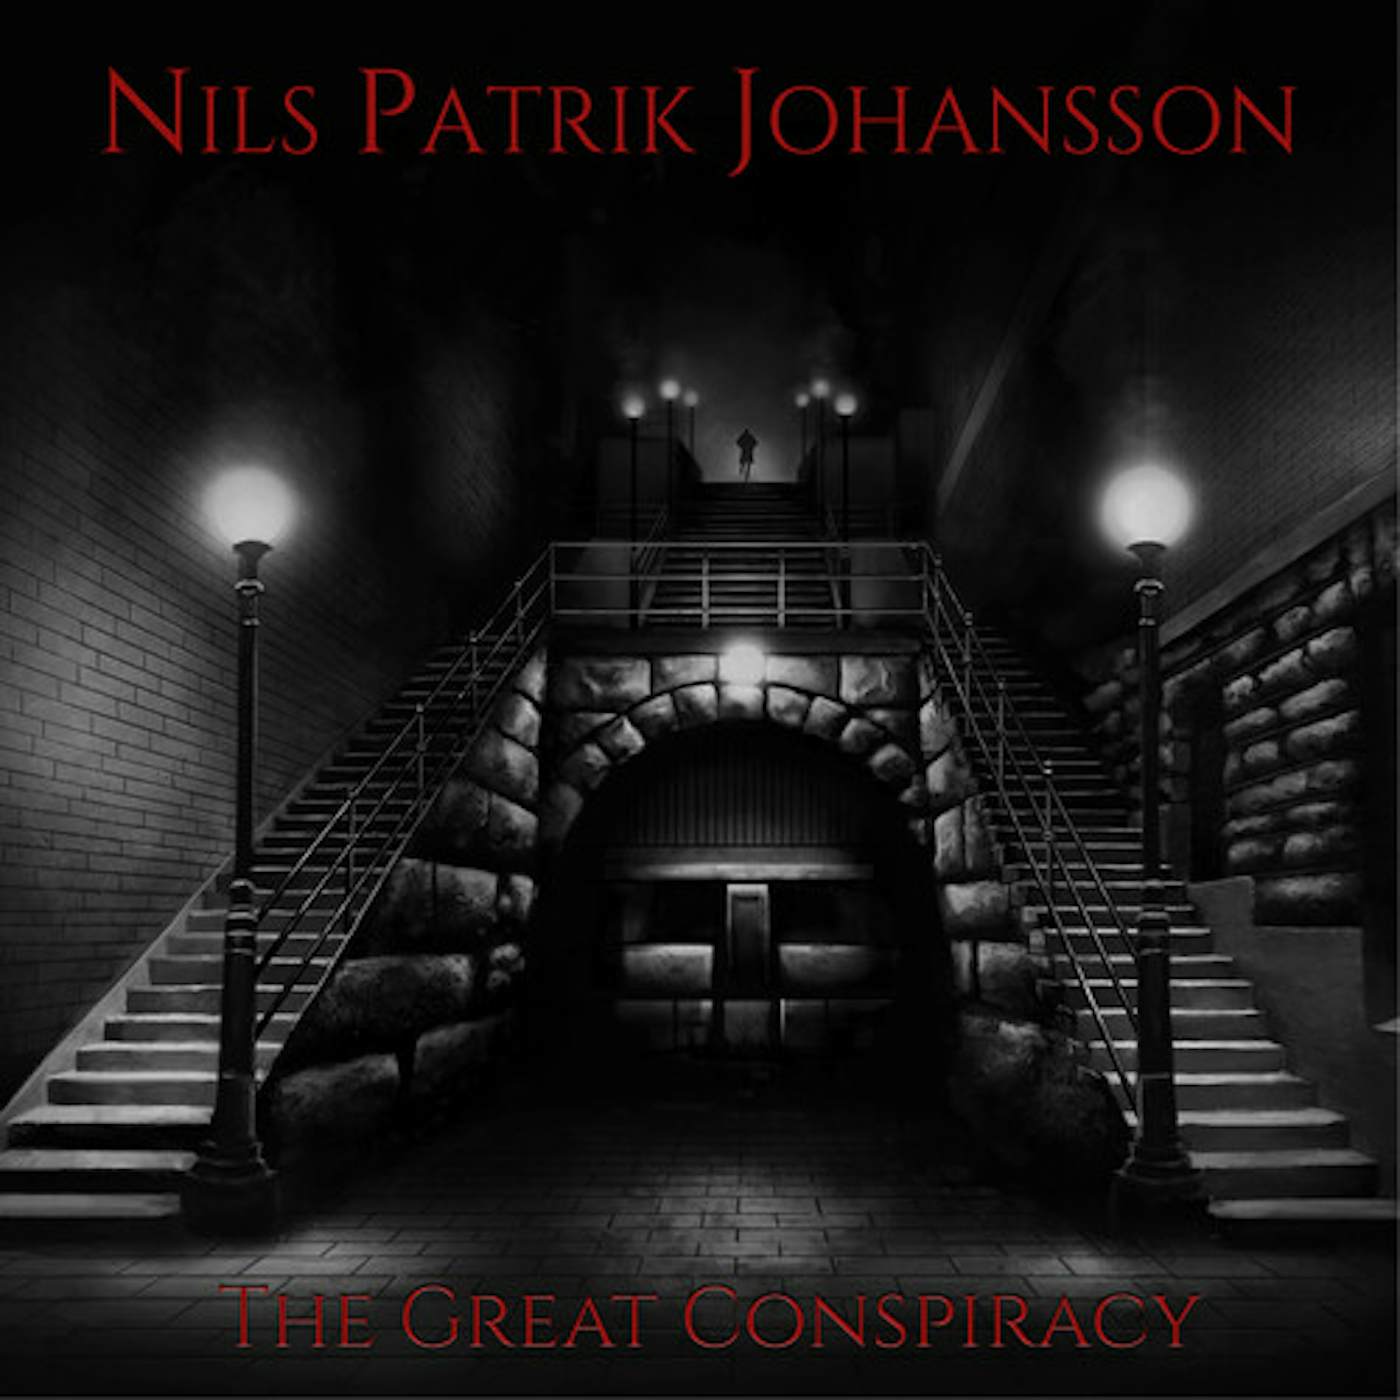 Nils Patrik Johansson GREAT CONSPIRACY Vinyl Record